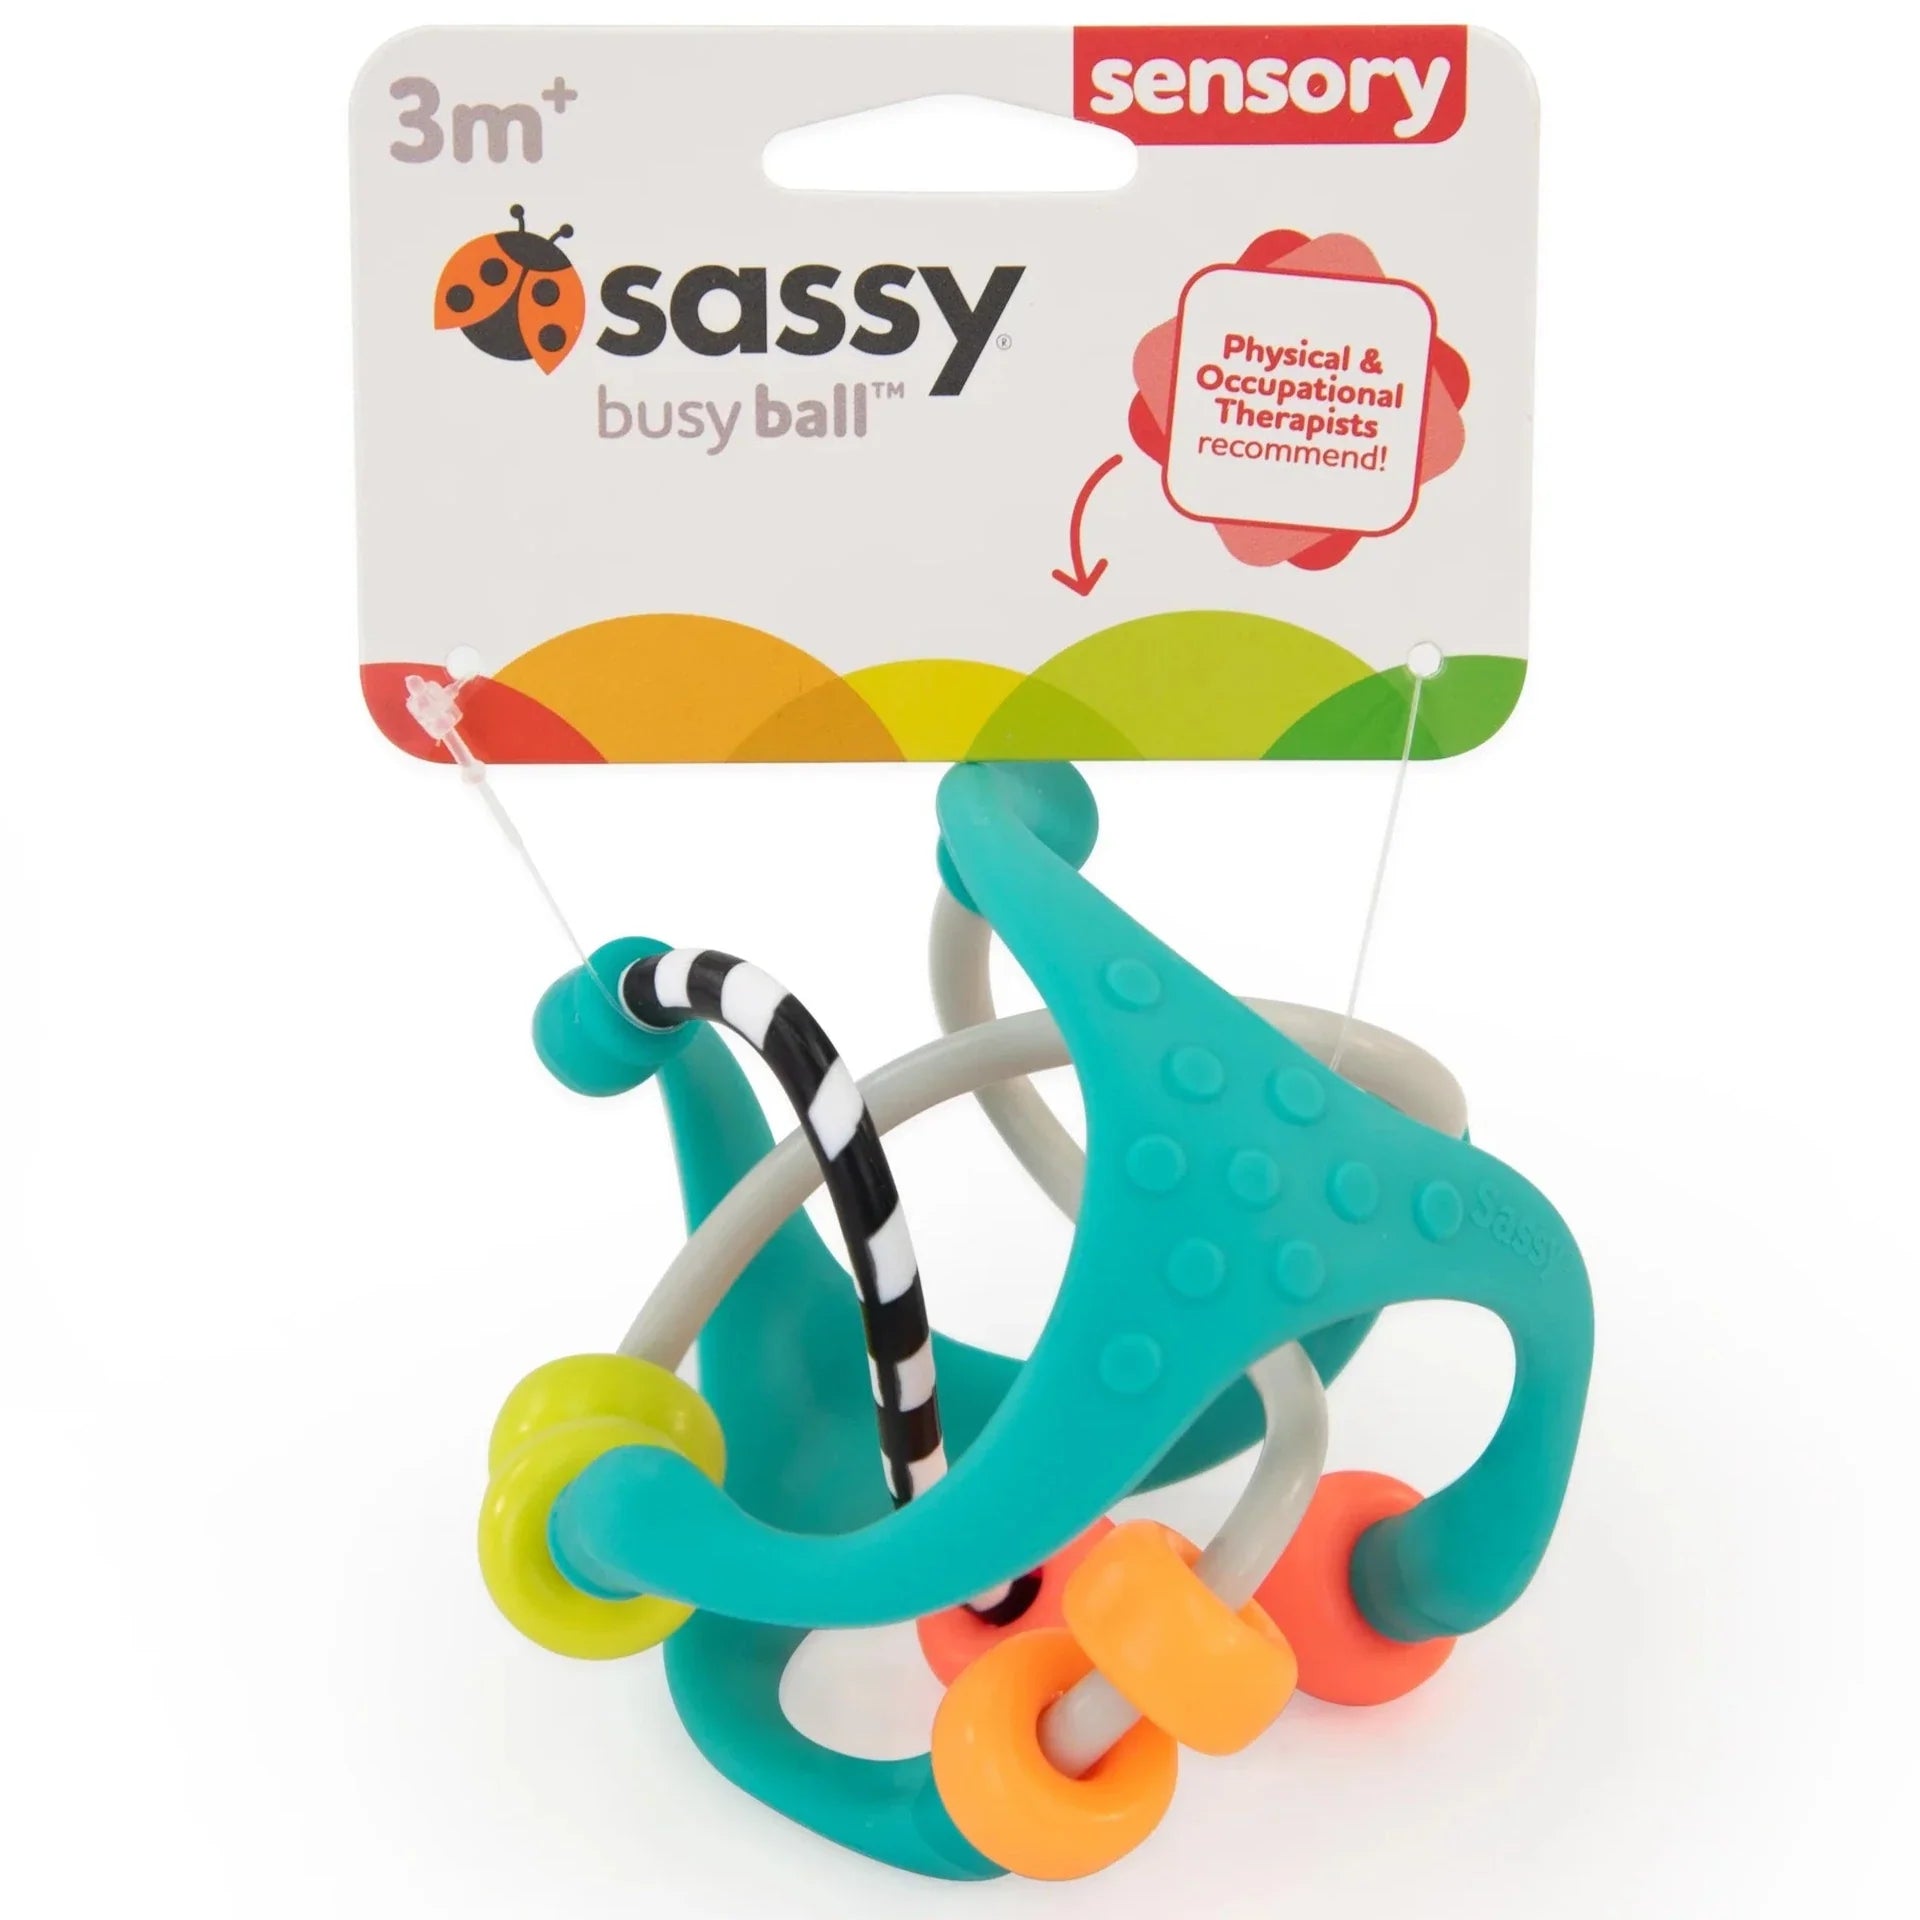 Sassy: Busy Ball teether